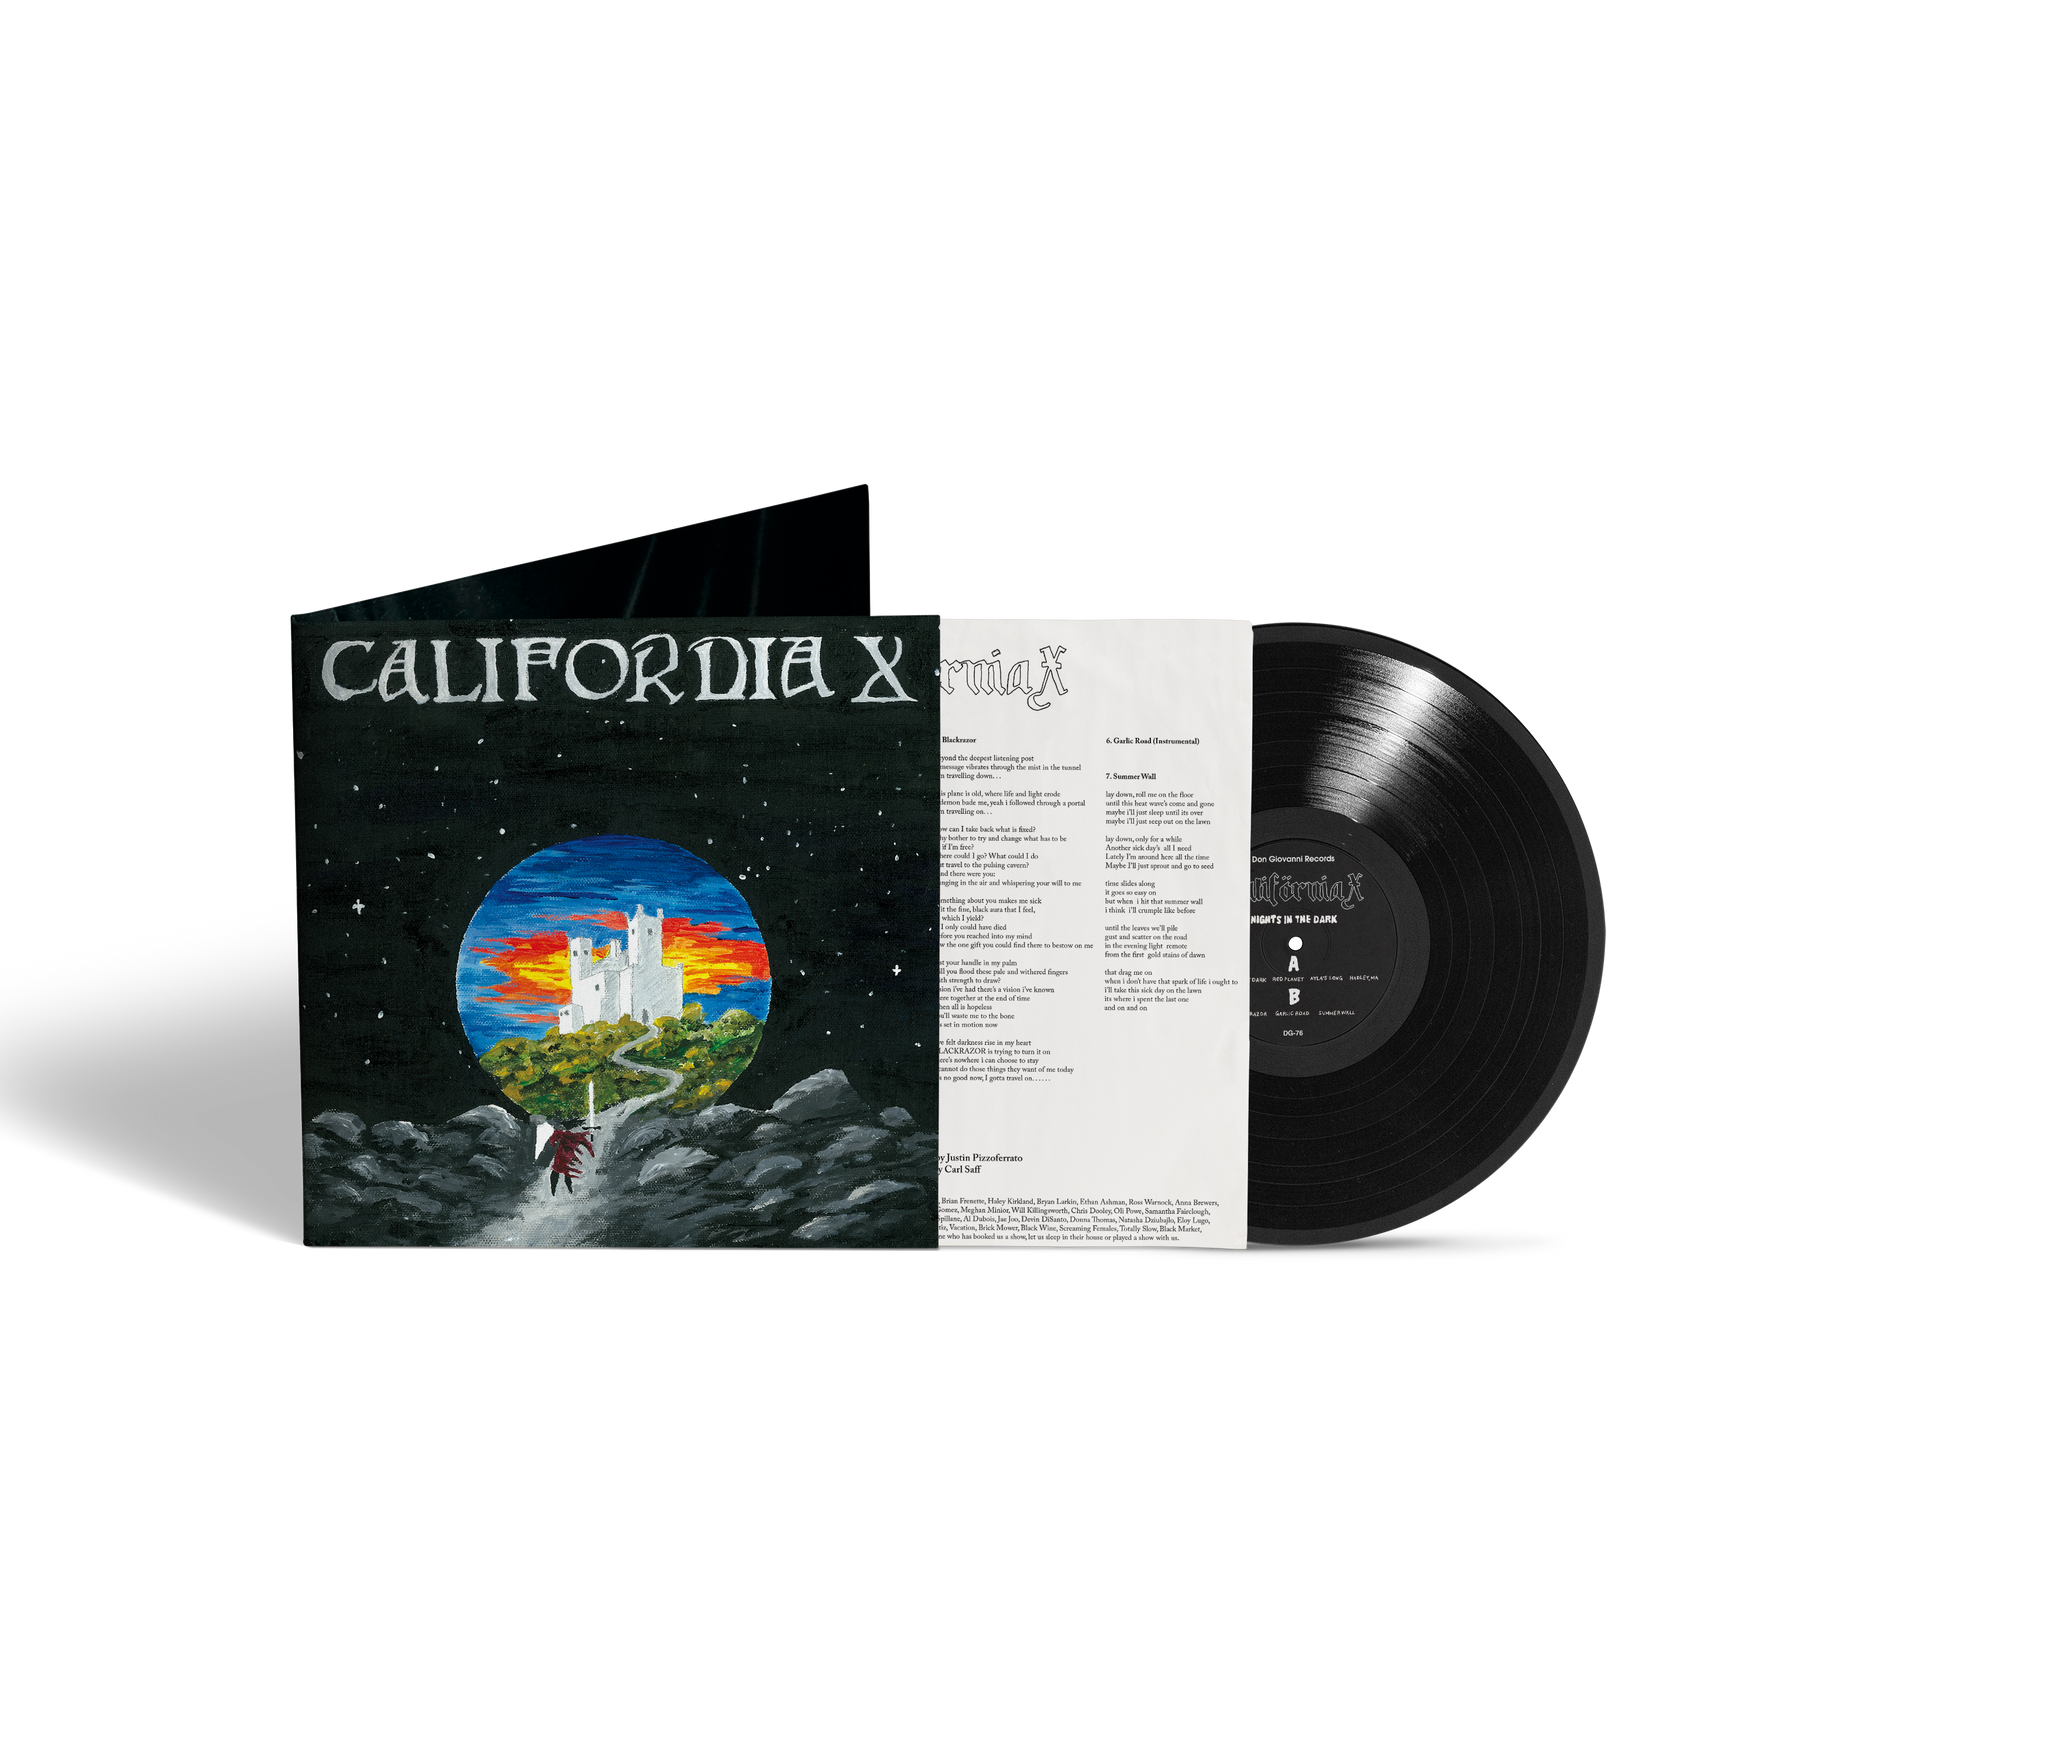 California X "Nights In The Dark" 12"